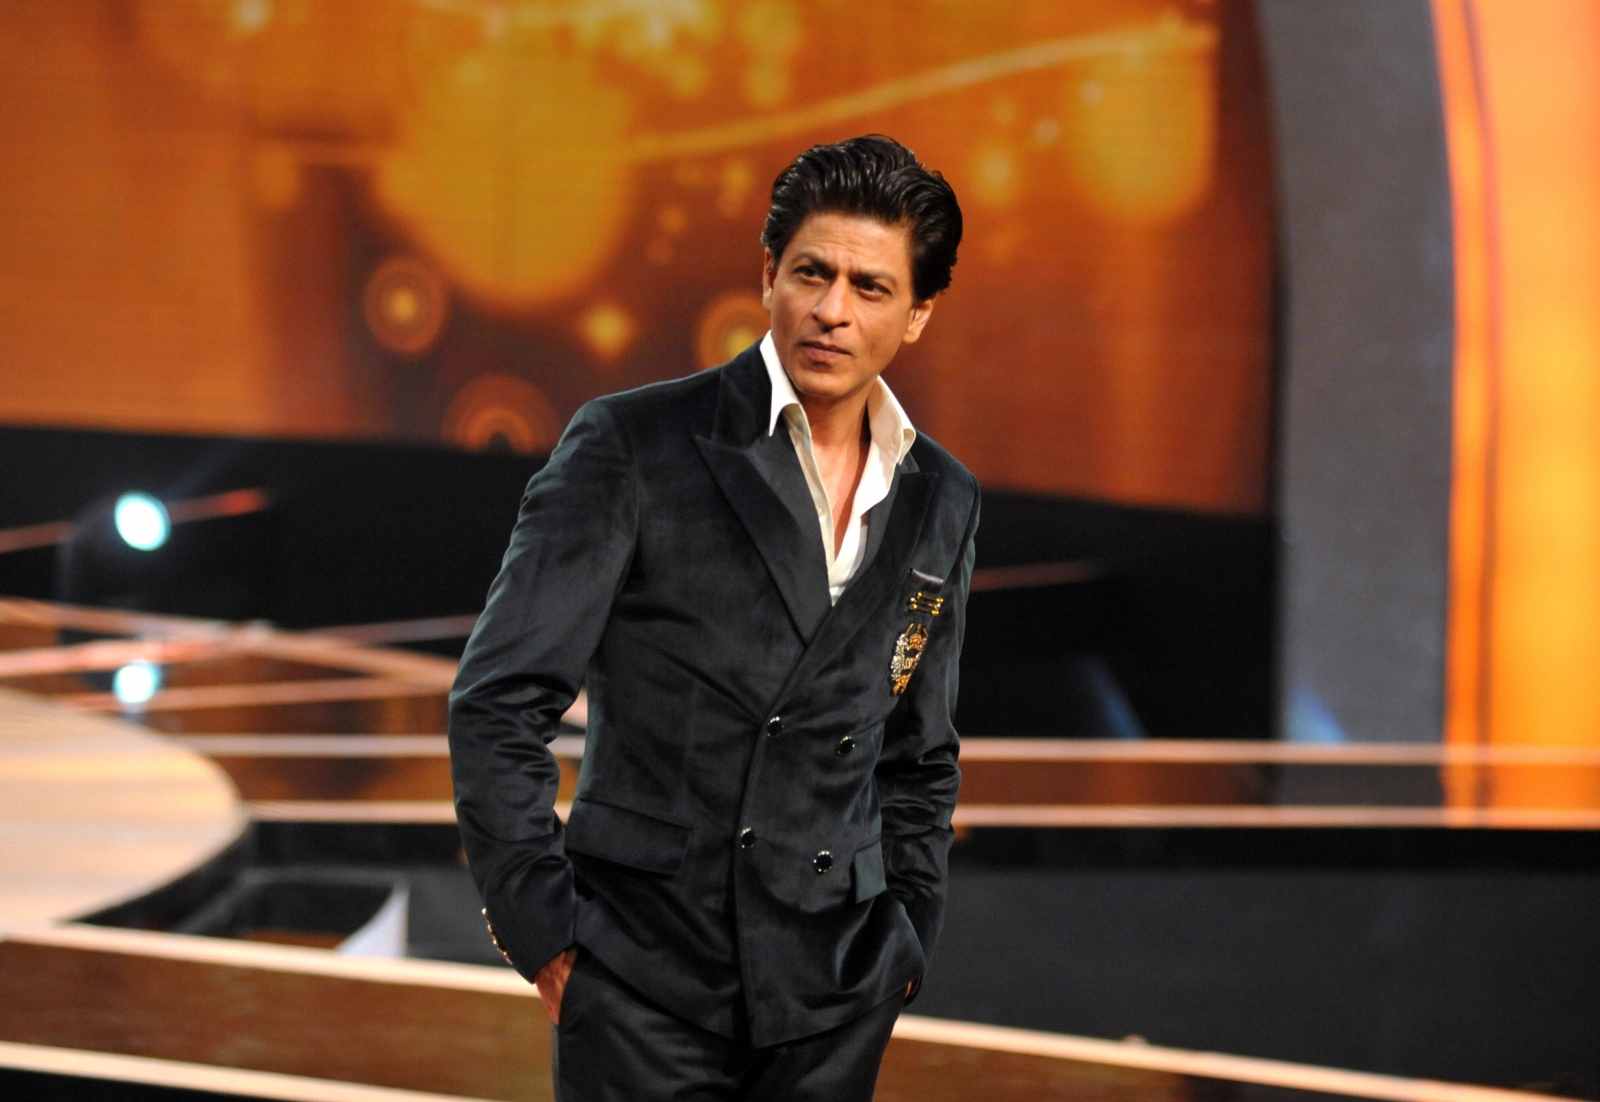 Shah Rukh Khan detained at US airport: 'It really sucks' says Bollywood